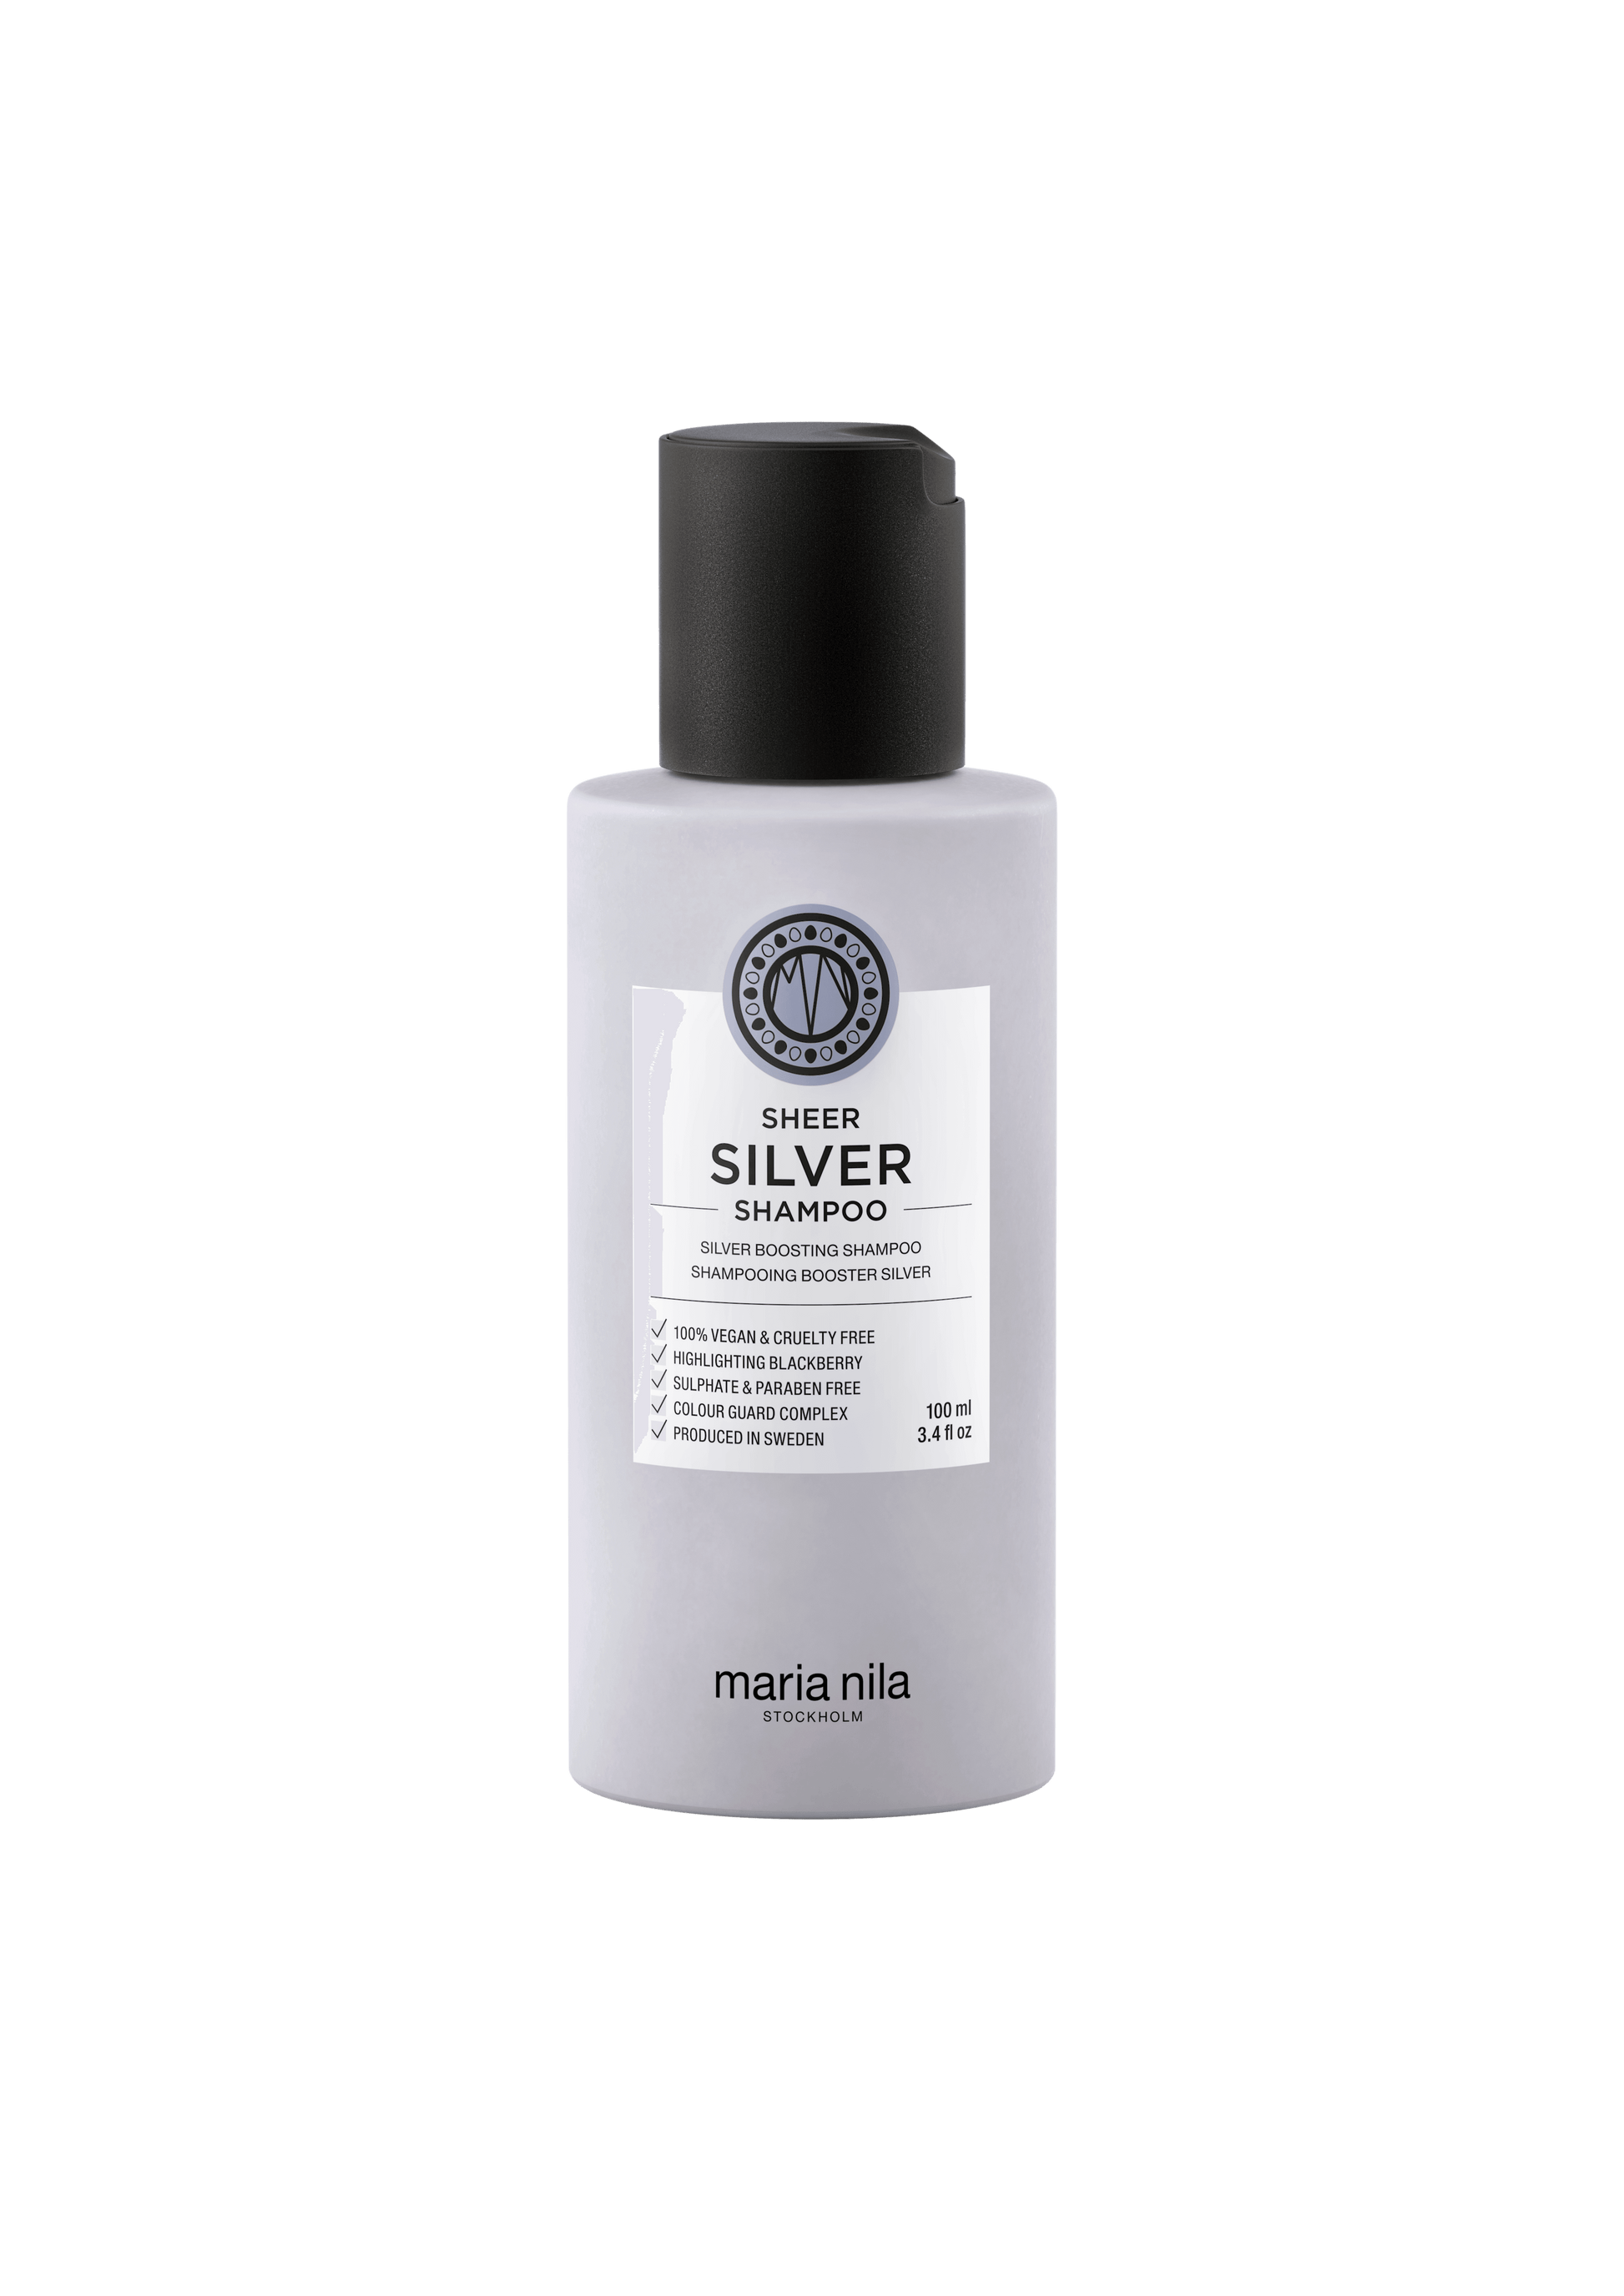 Sheer Silver Shampoo - The Coloroom 